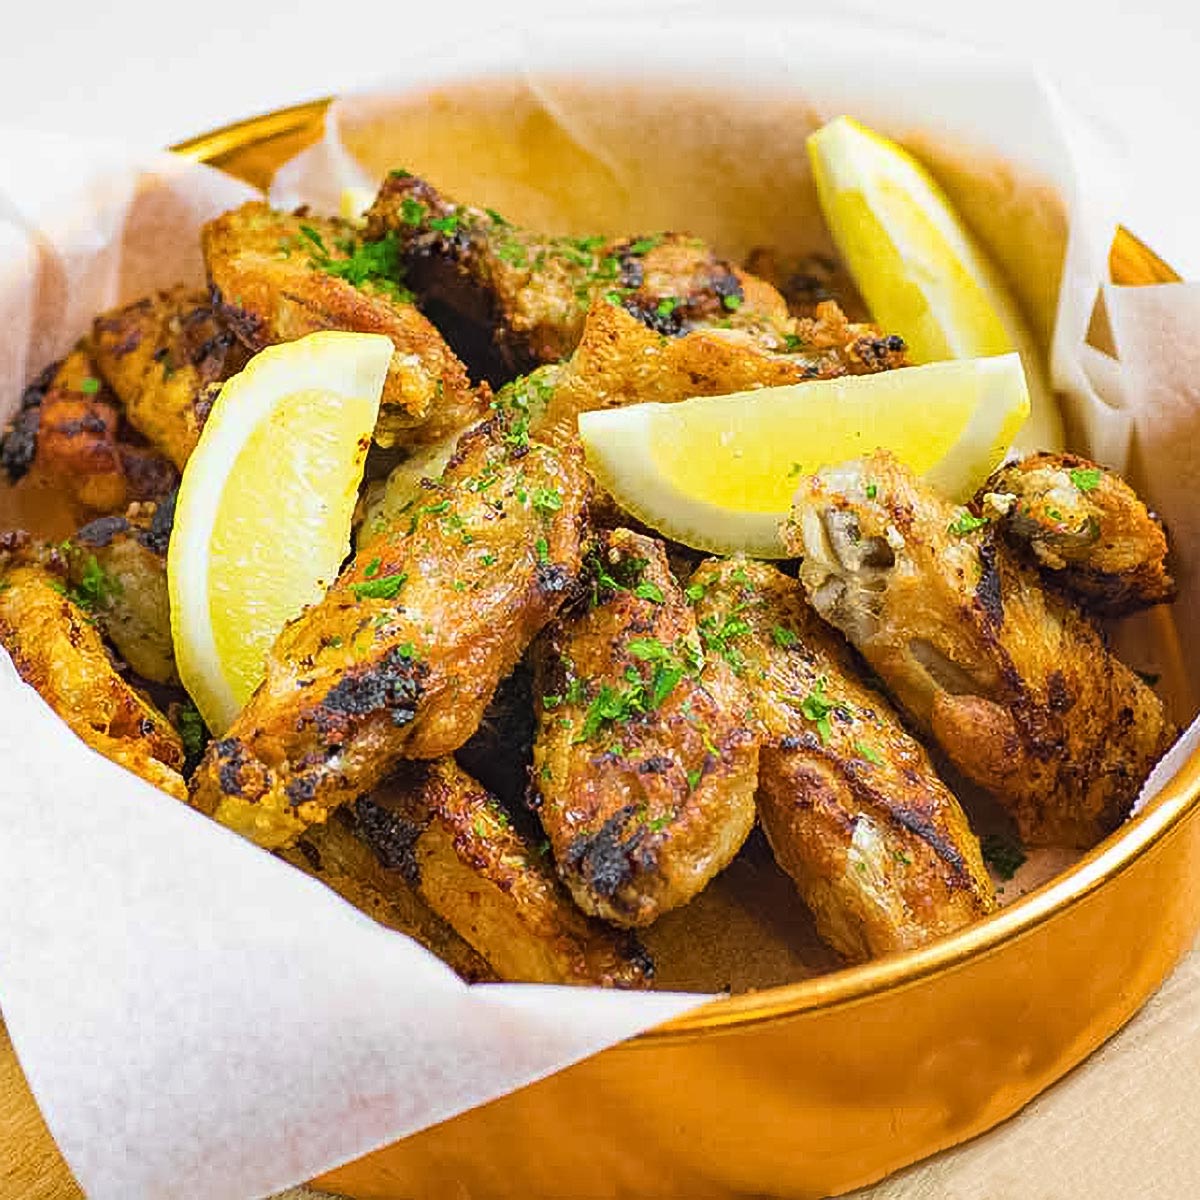 Pan fried chicken wings.